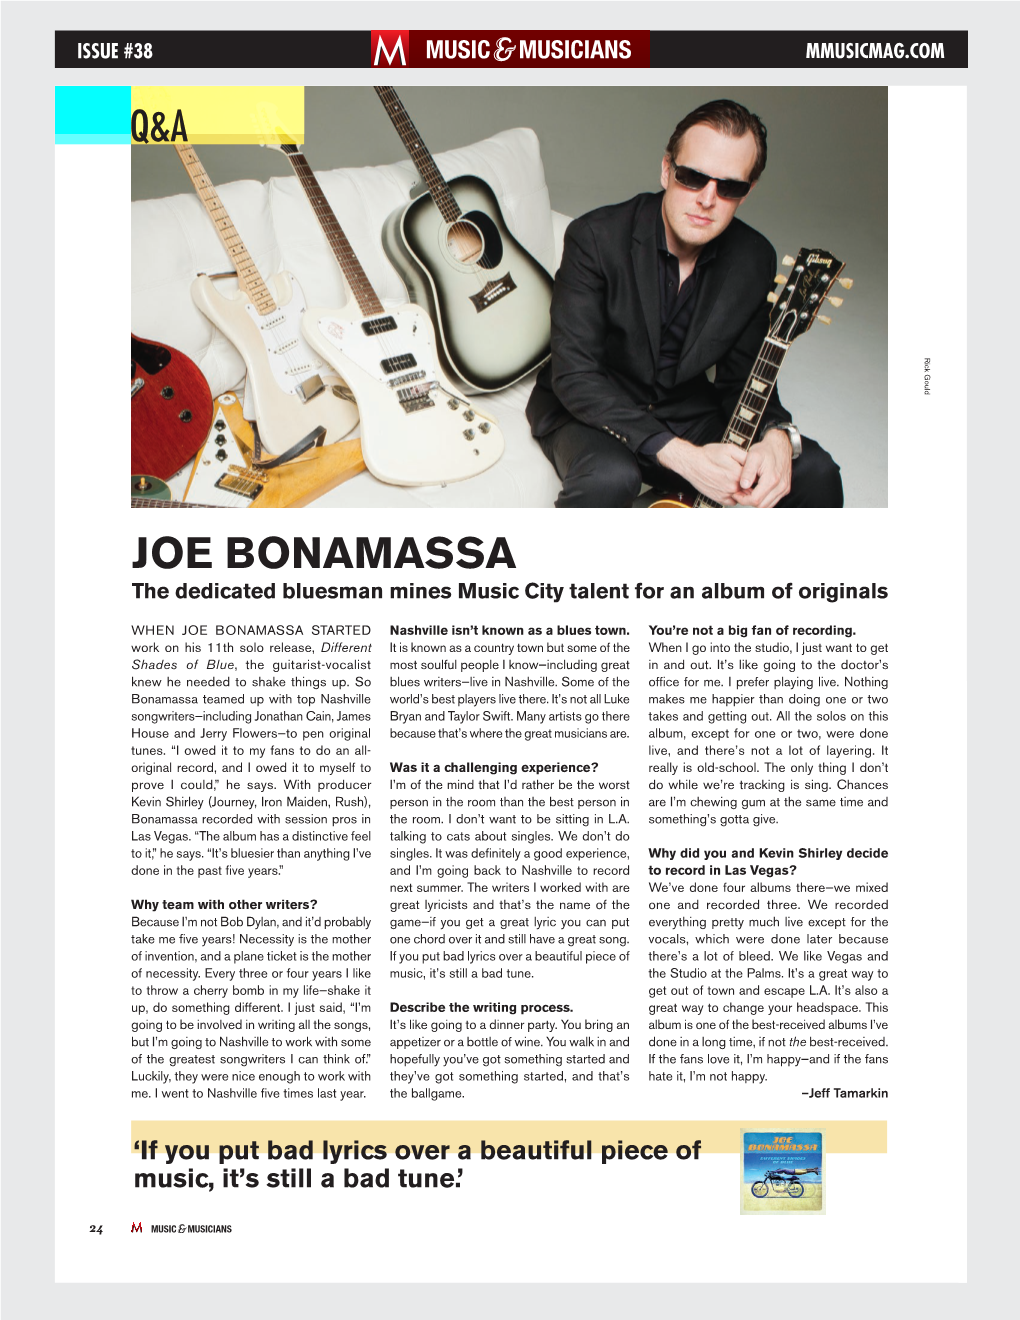 JOE BONAMASSA the Dedicated Bluesman Mines Music City Talent for an Album of Originals